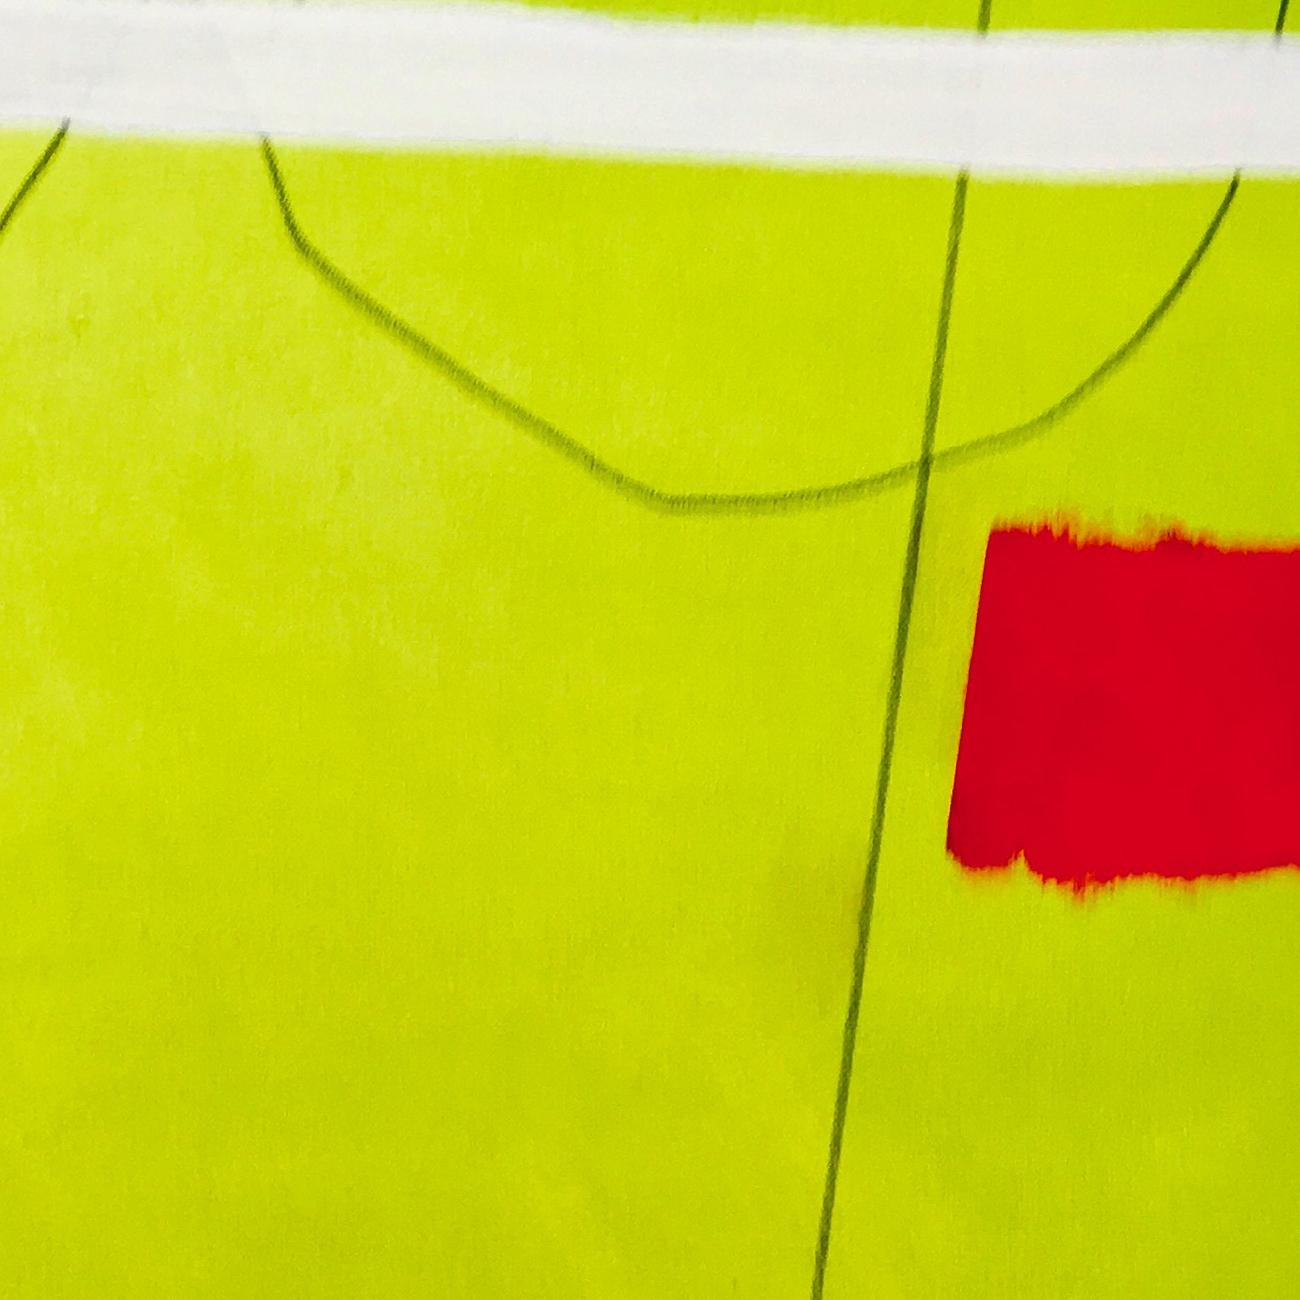 Interieur (Abstrakte Malerei) (Gelb), Abstract Painting, von Xanda McCagg